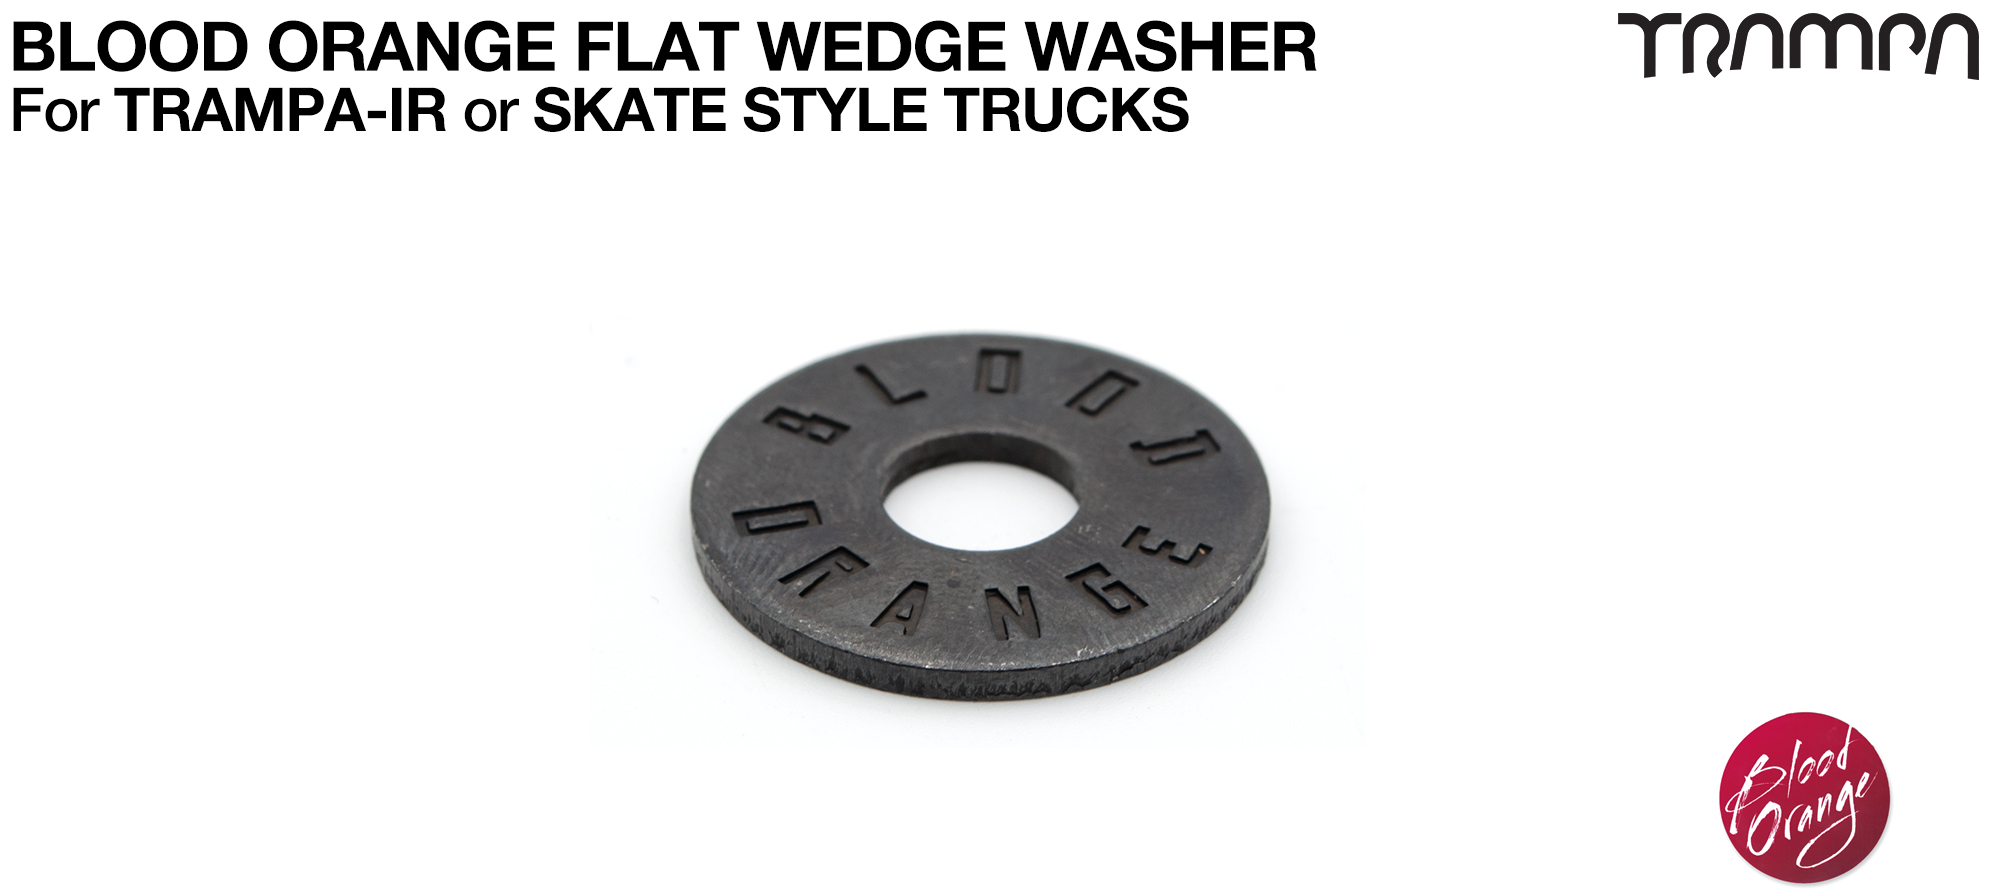 FLAT Washer for WEDGE Bushing - BLACK 